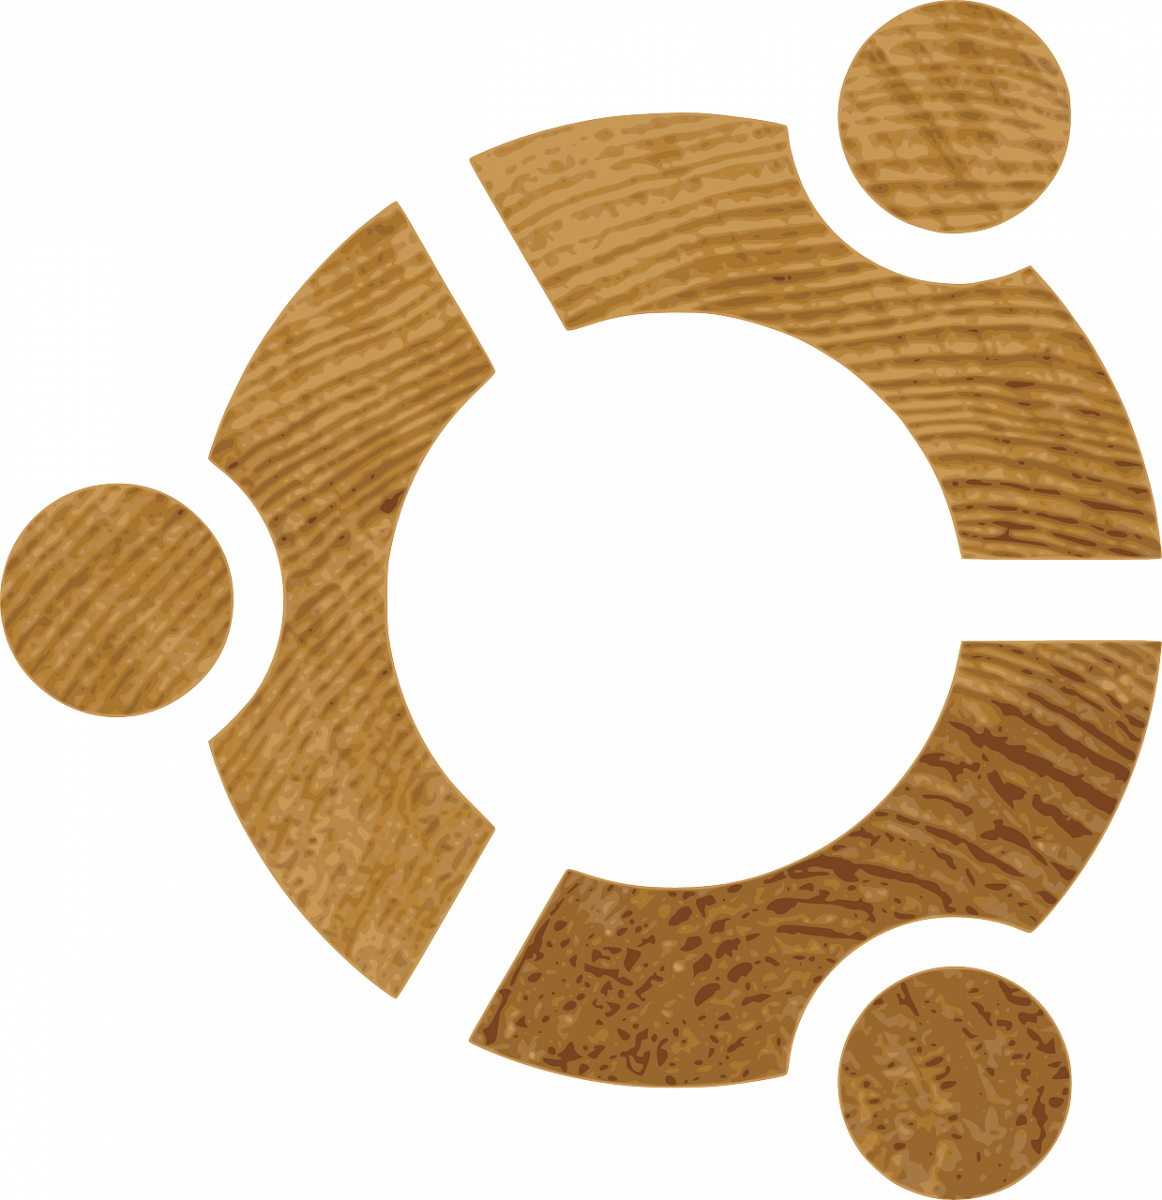 The Ubuntu Logo using a wood texture